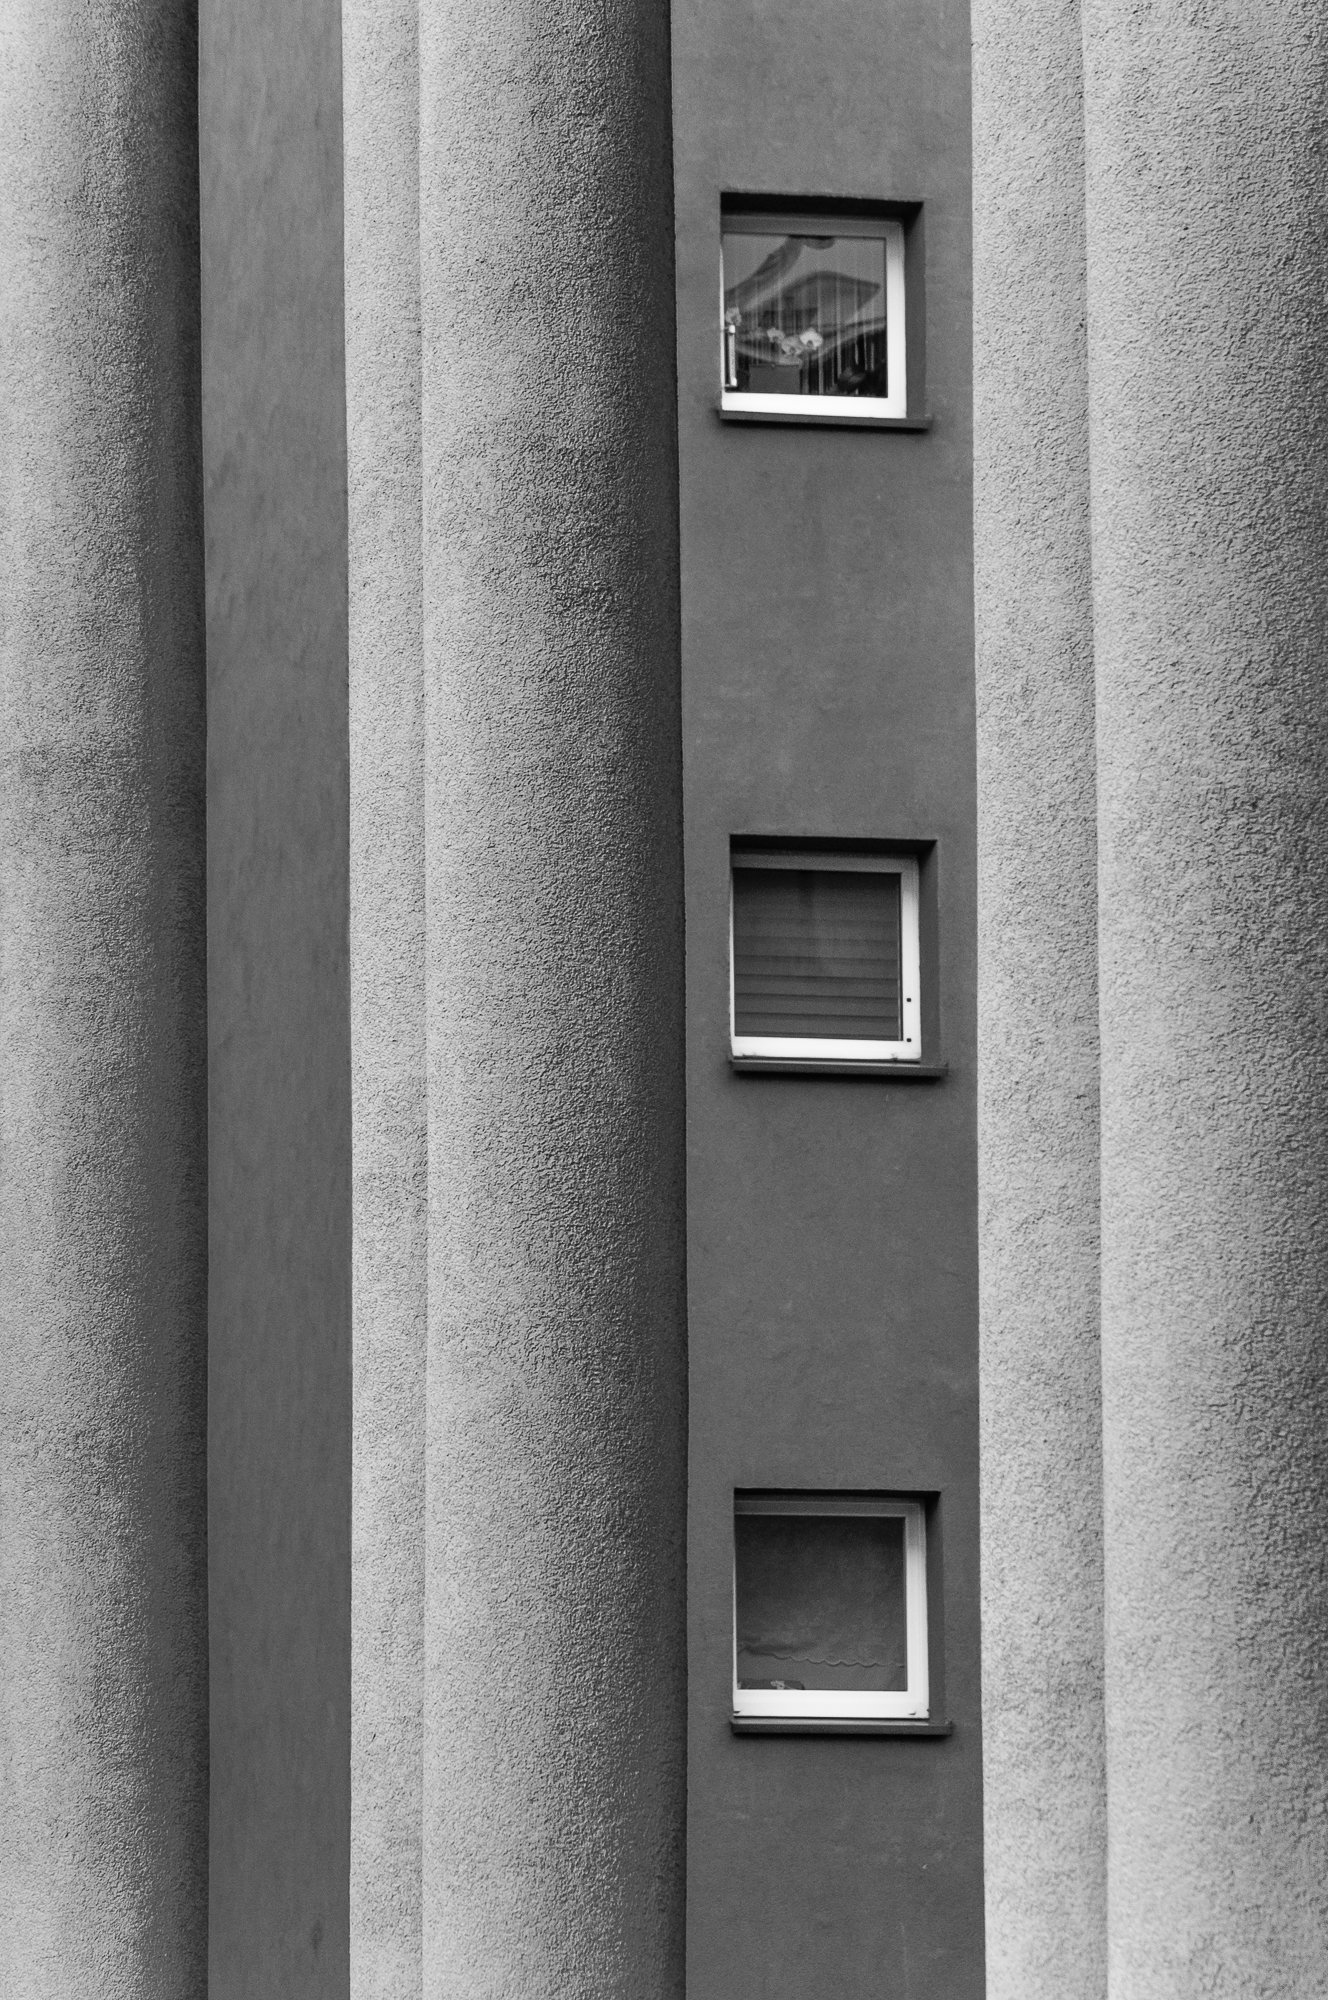 Adam Mazek Photography Warsaw 2017. Minimalism. Windows and columns. Concrete. "Negation of the End." Inspired by Sheeler. "Negacja Końca"